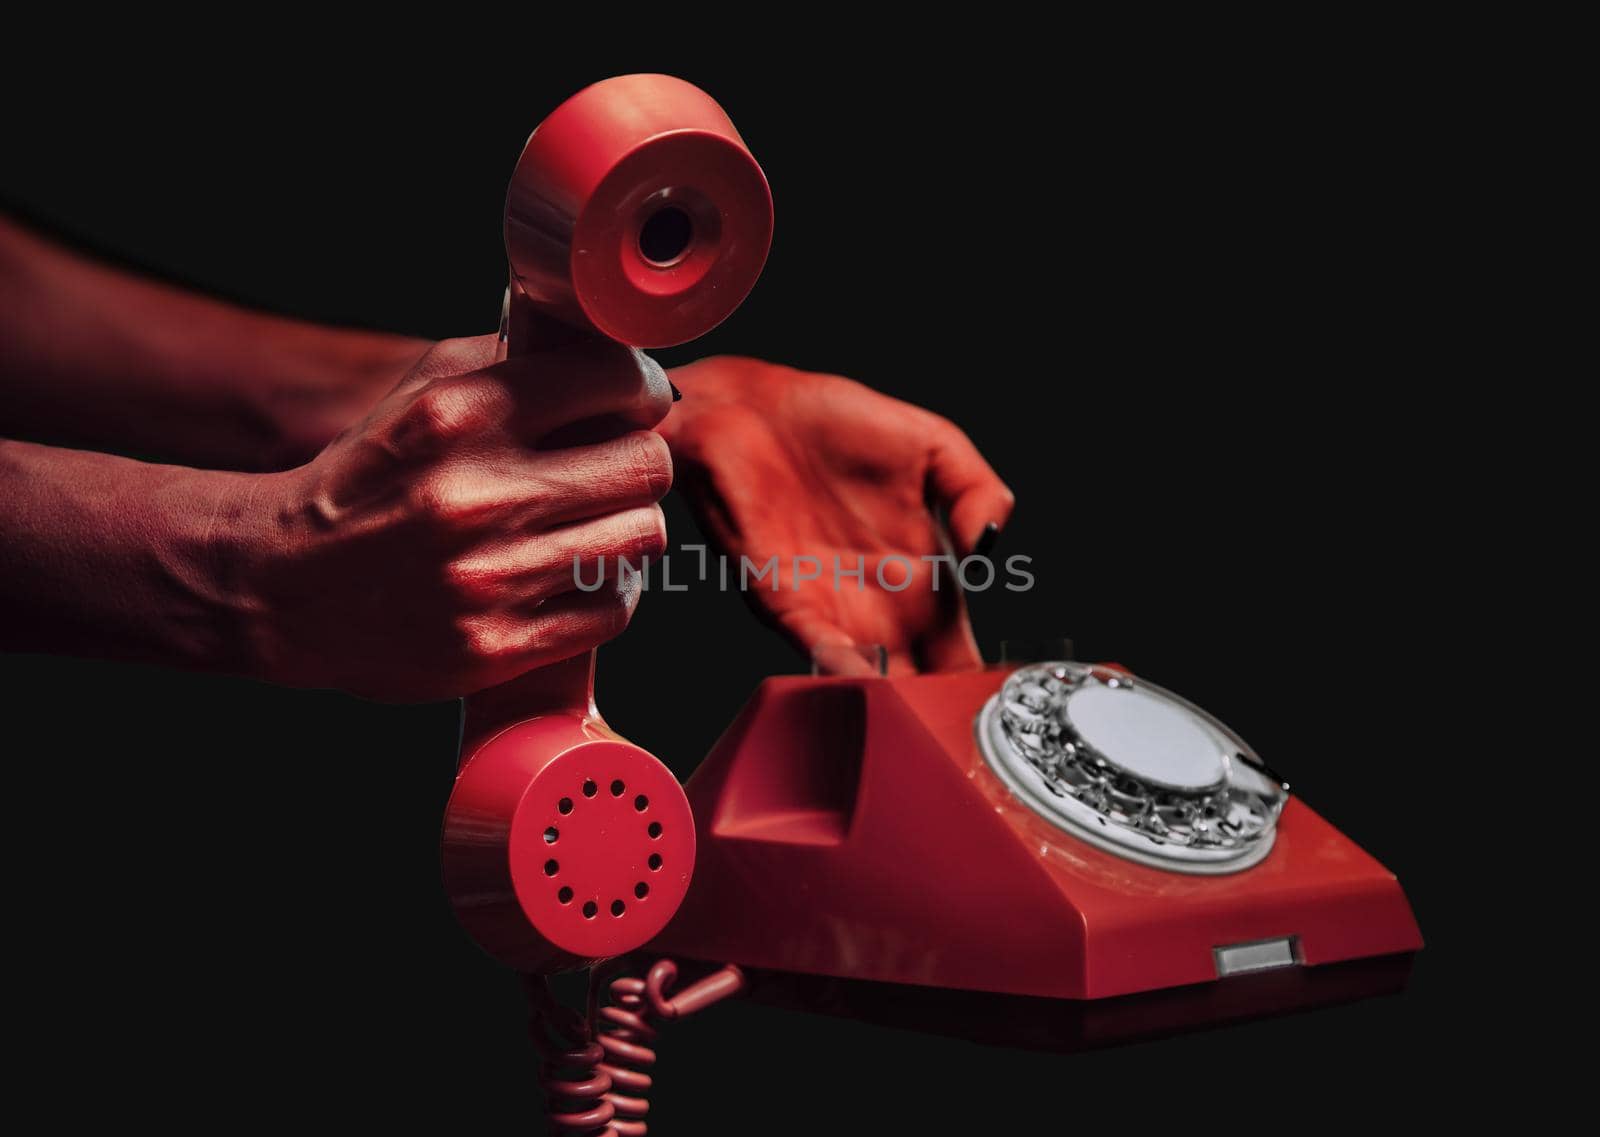 Devil hands giving vintage phone by alexAleksei